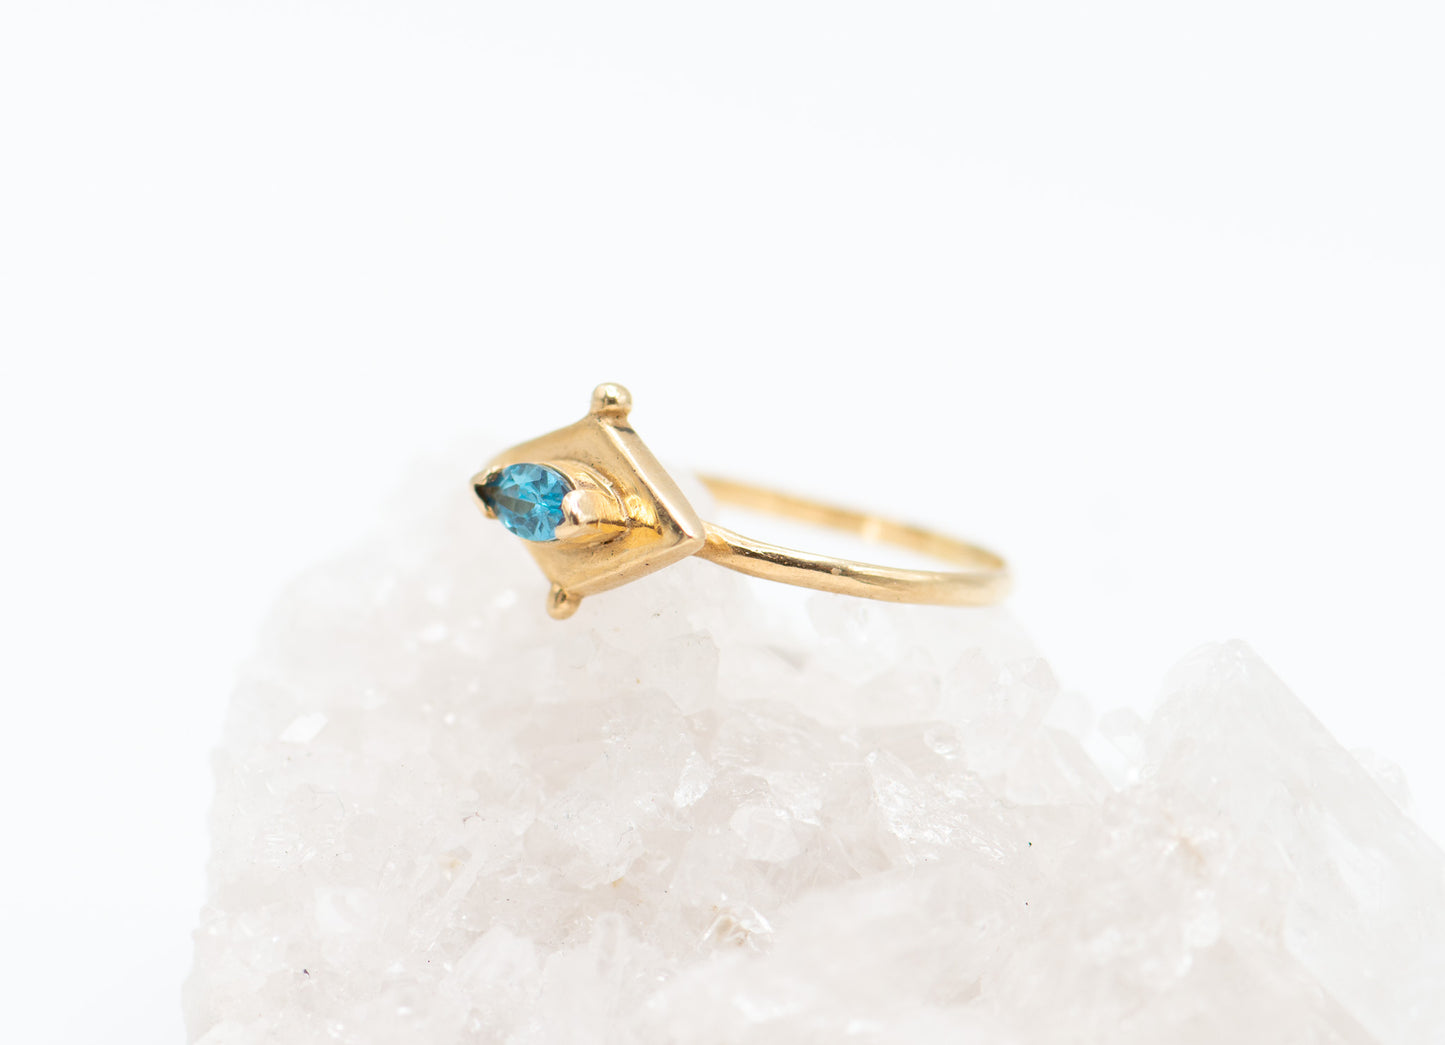 Llight blue marquise stone diamond shape ring